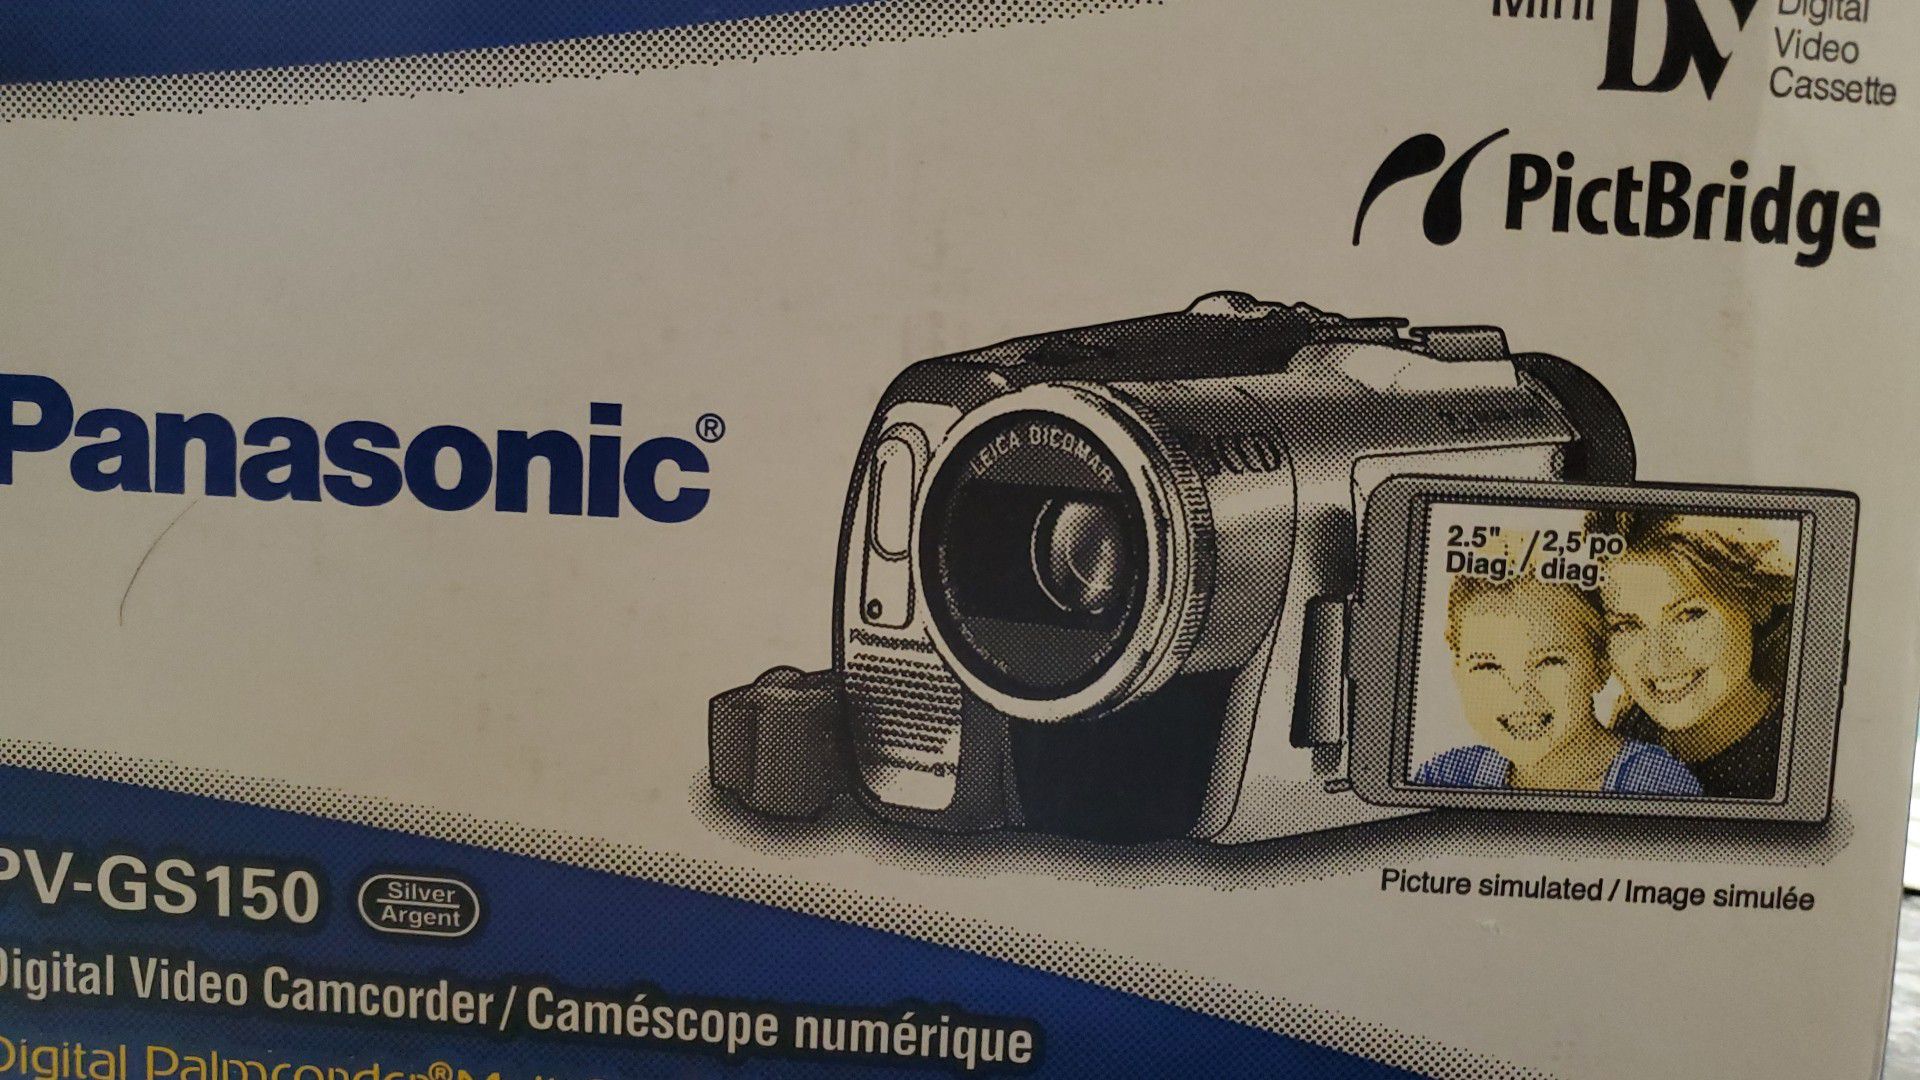 New Mini Digital Camcorder Panasonic 10X optical zoom.